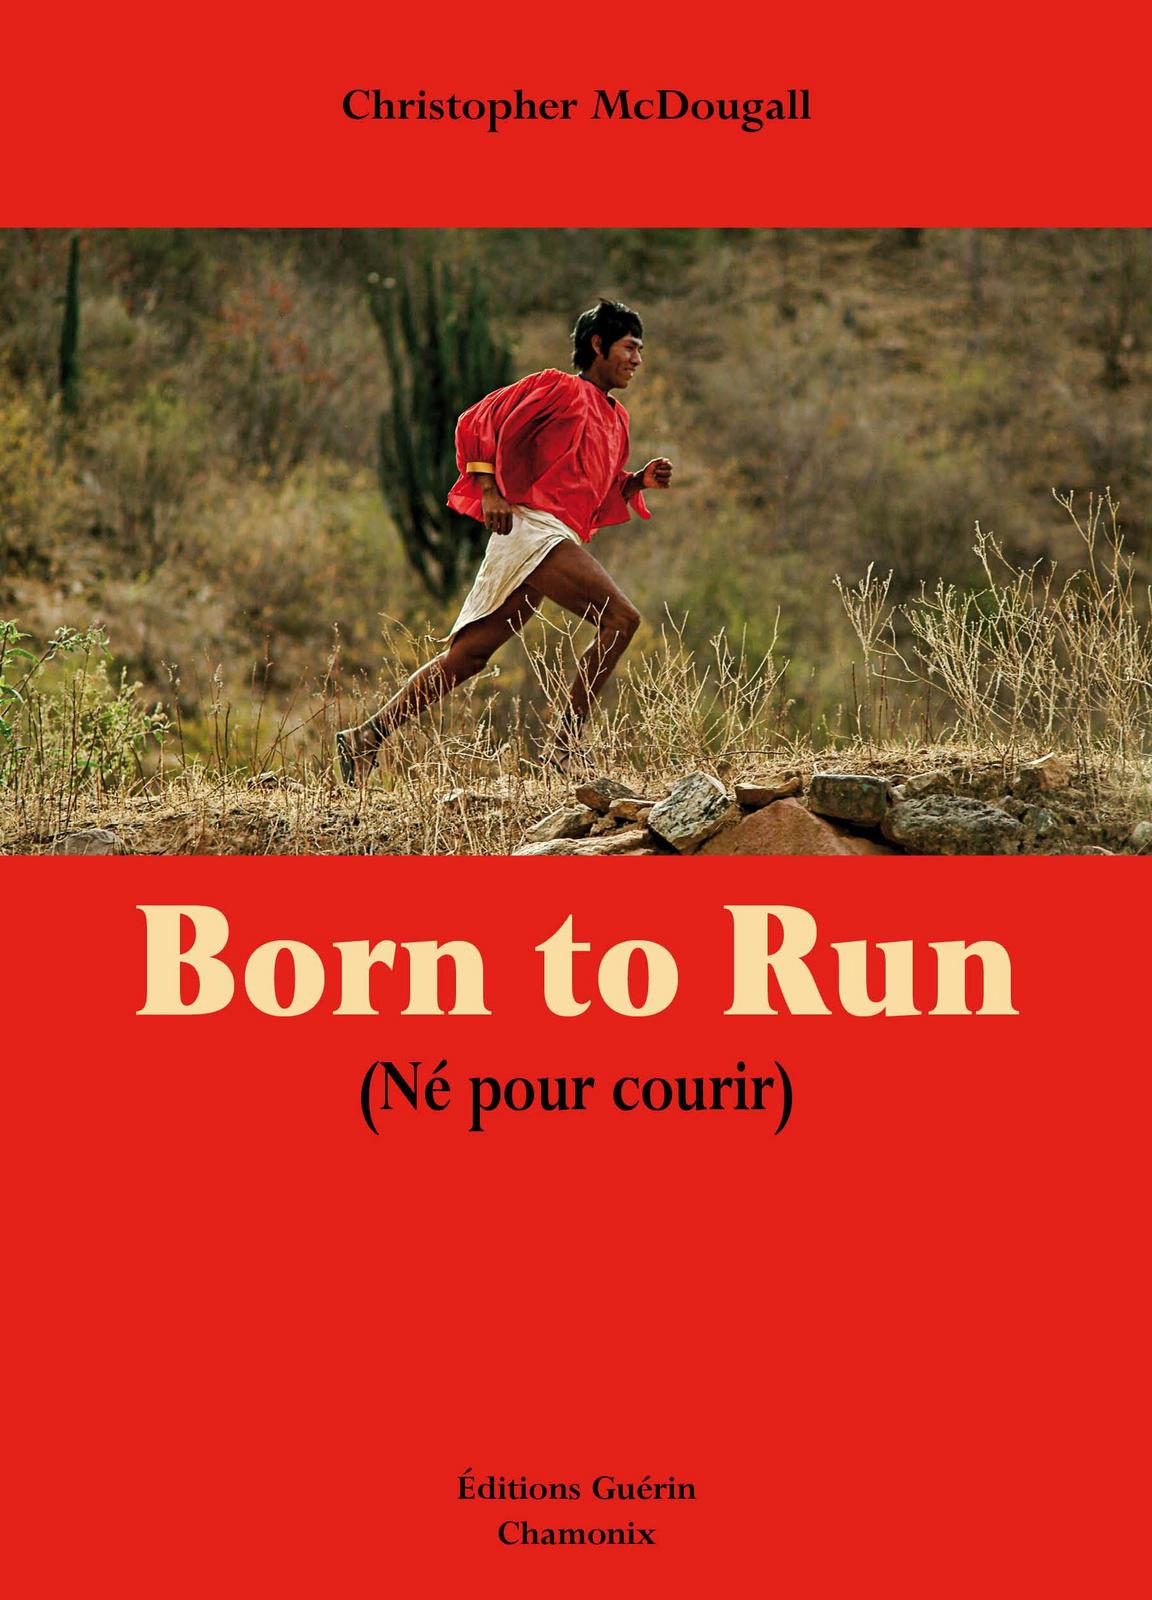 Born to Run (French language)